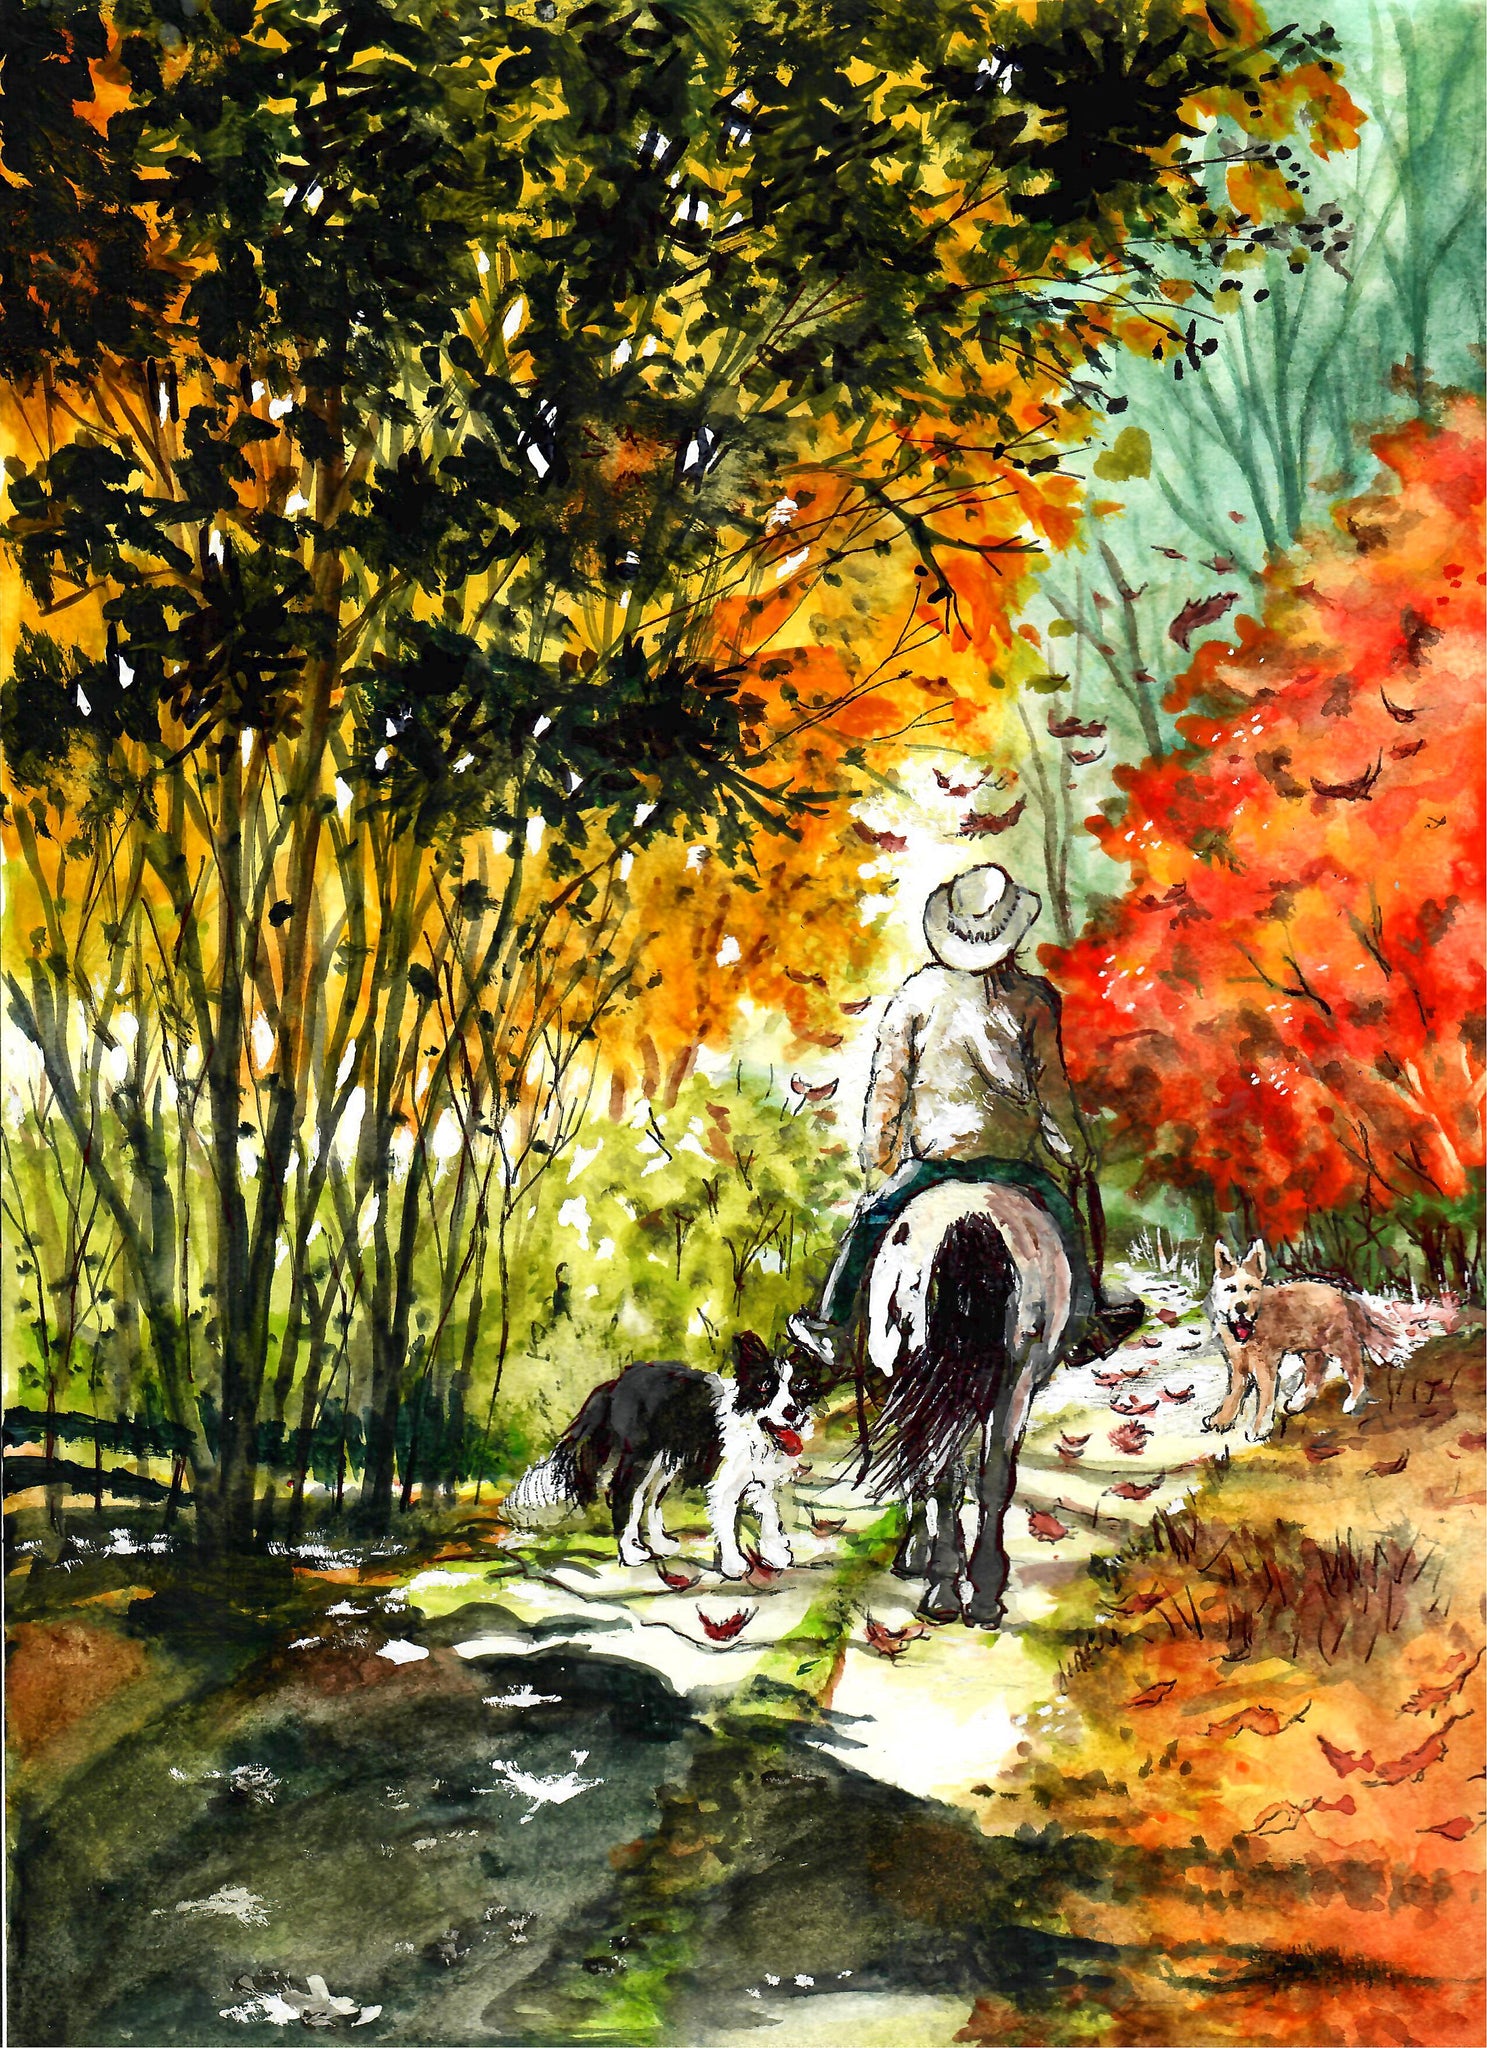 Western - Cowboy Dogs And Horse Riding Down An Autumn Road, Western Art Print, Cowboy Art